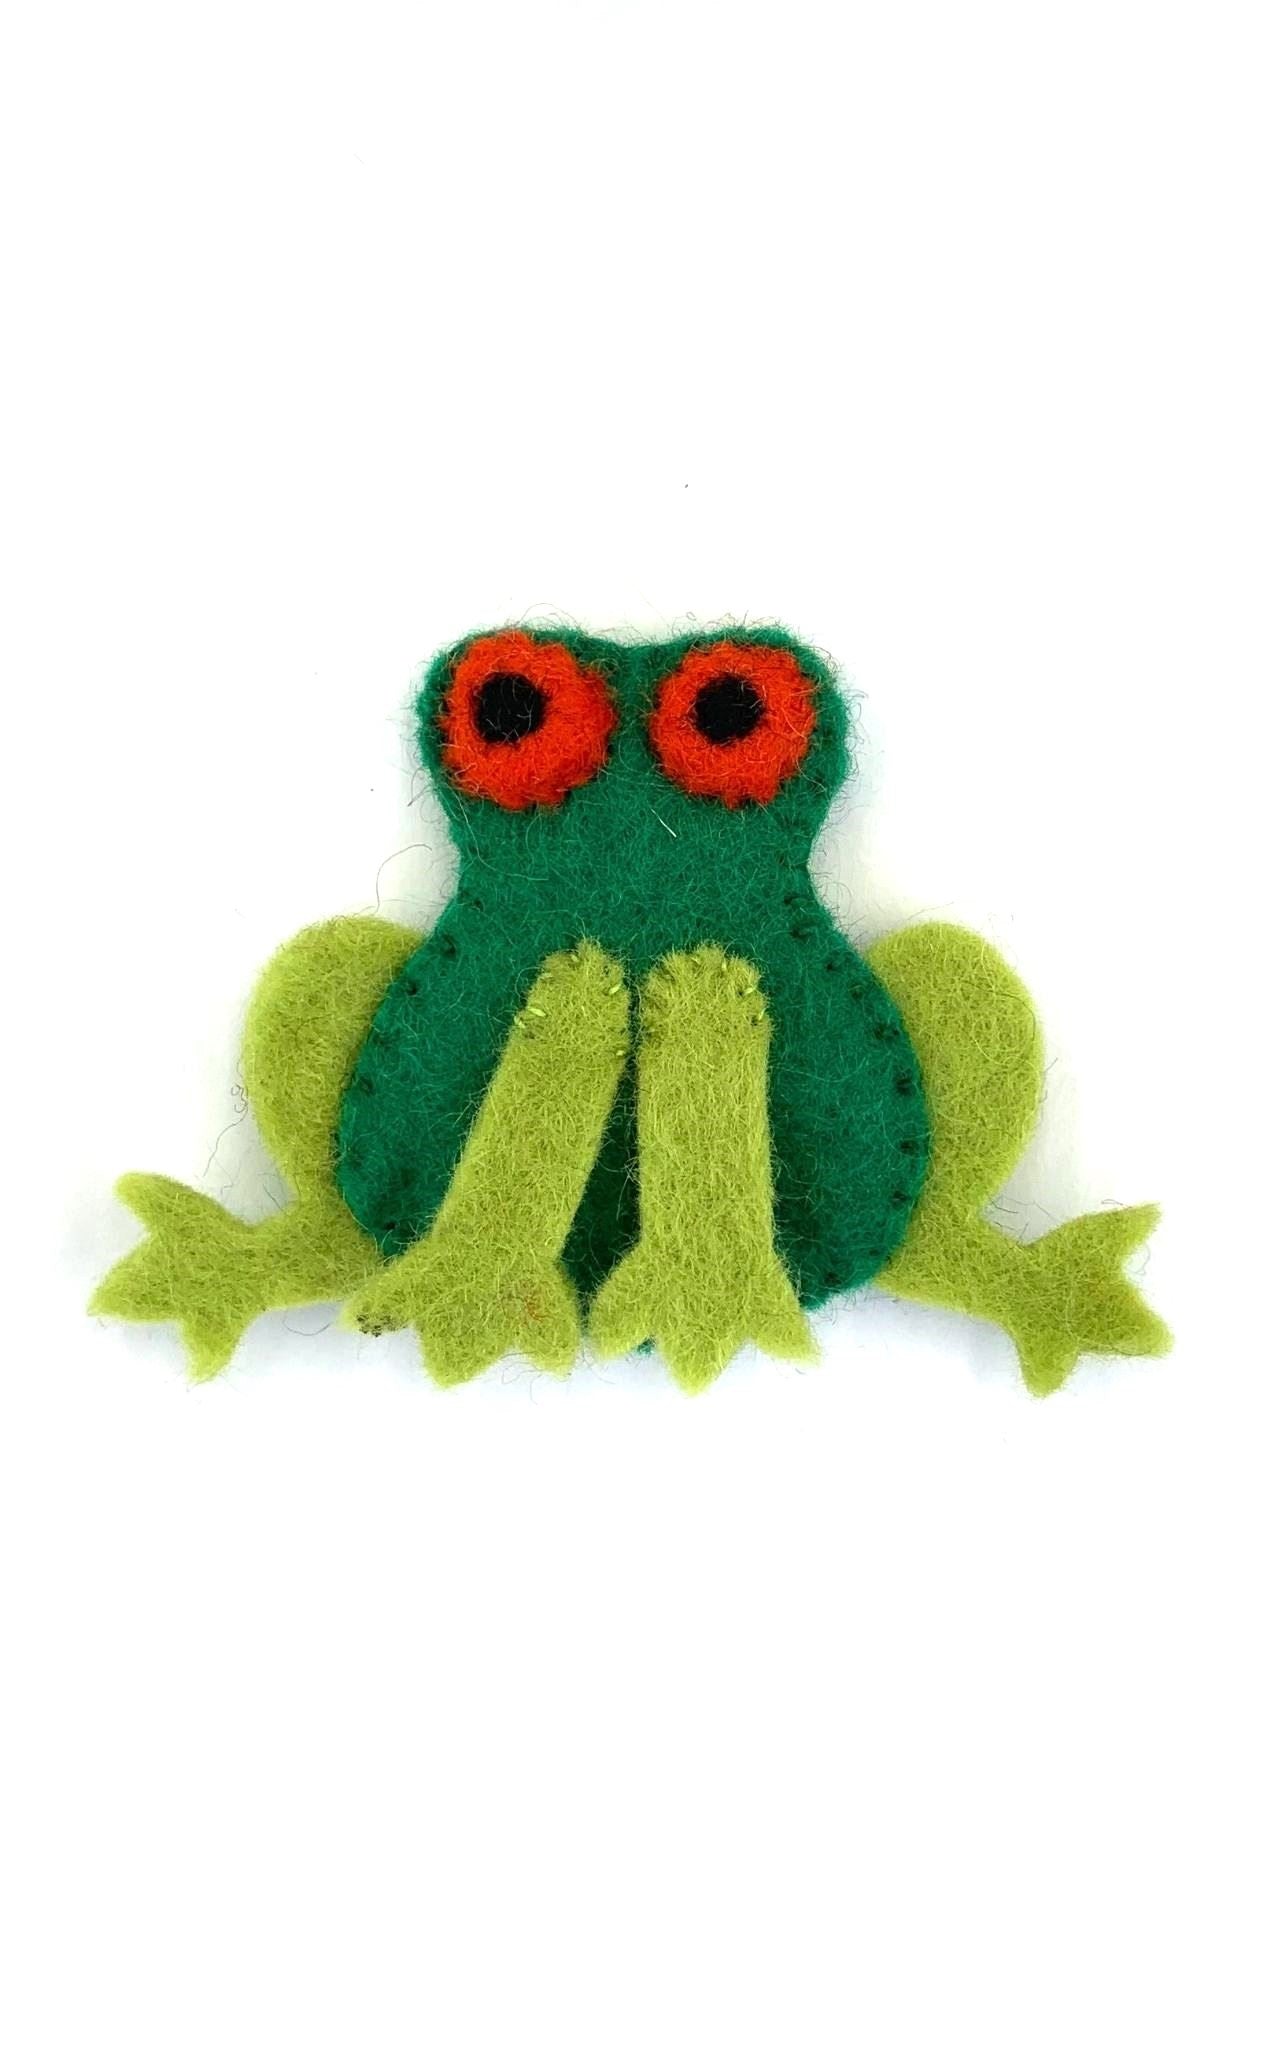 Surya Australia Ethical Wool Felt Finger Puppets from Nepal - Frog